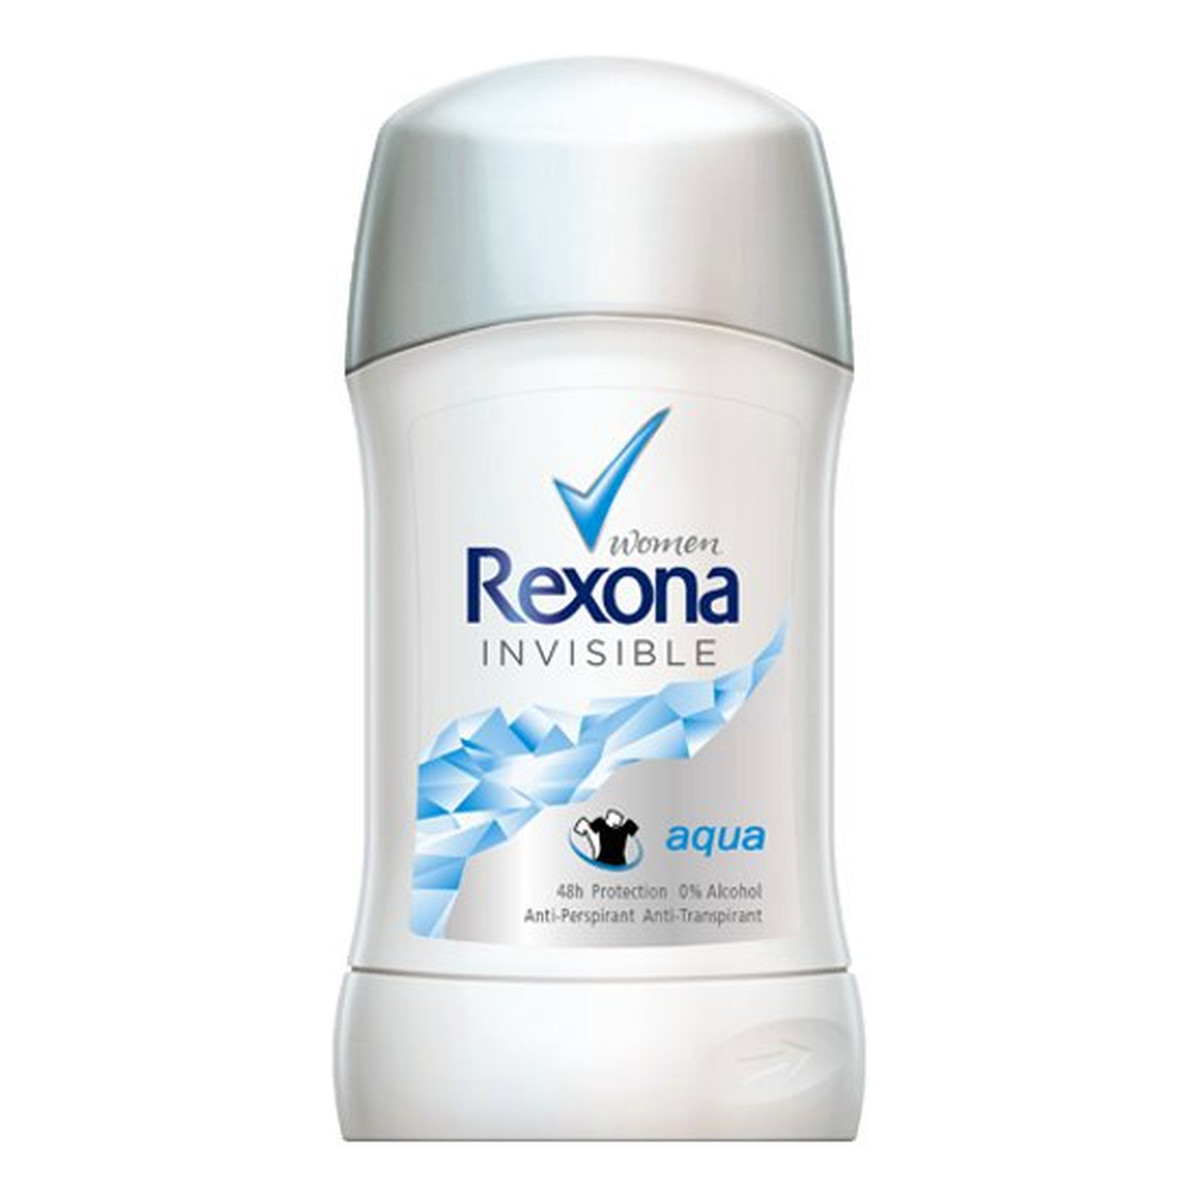 Rexona Invisible Dezodorant sztyft Aqua 40ml